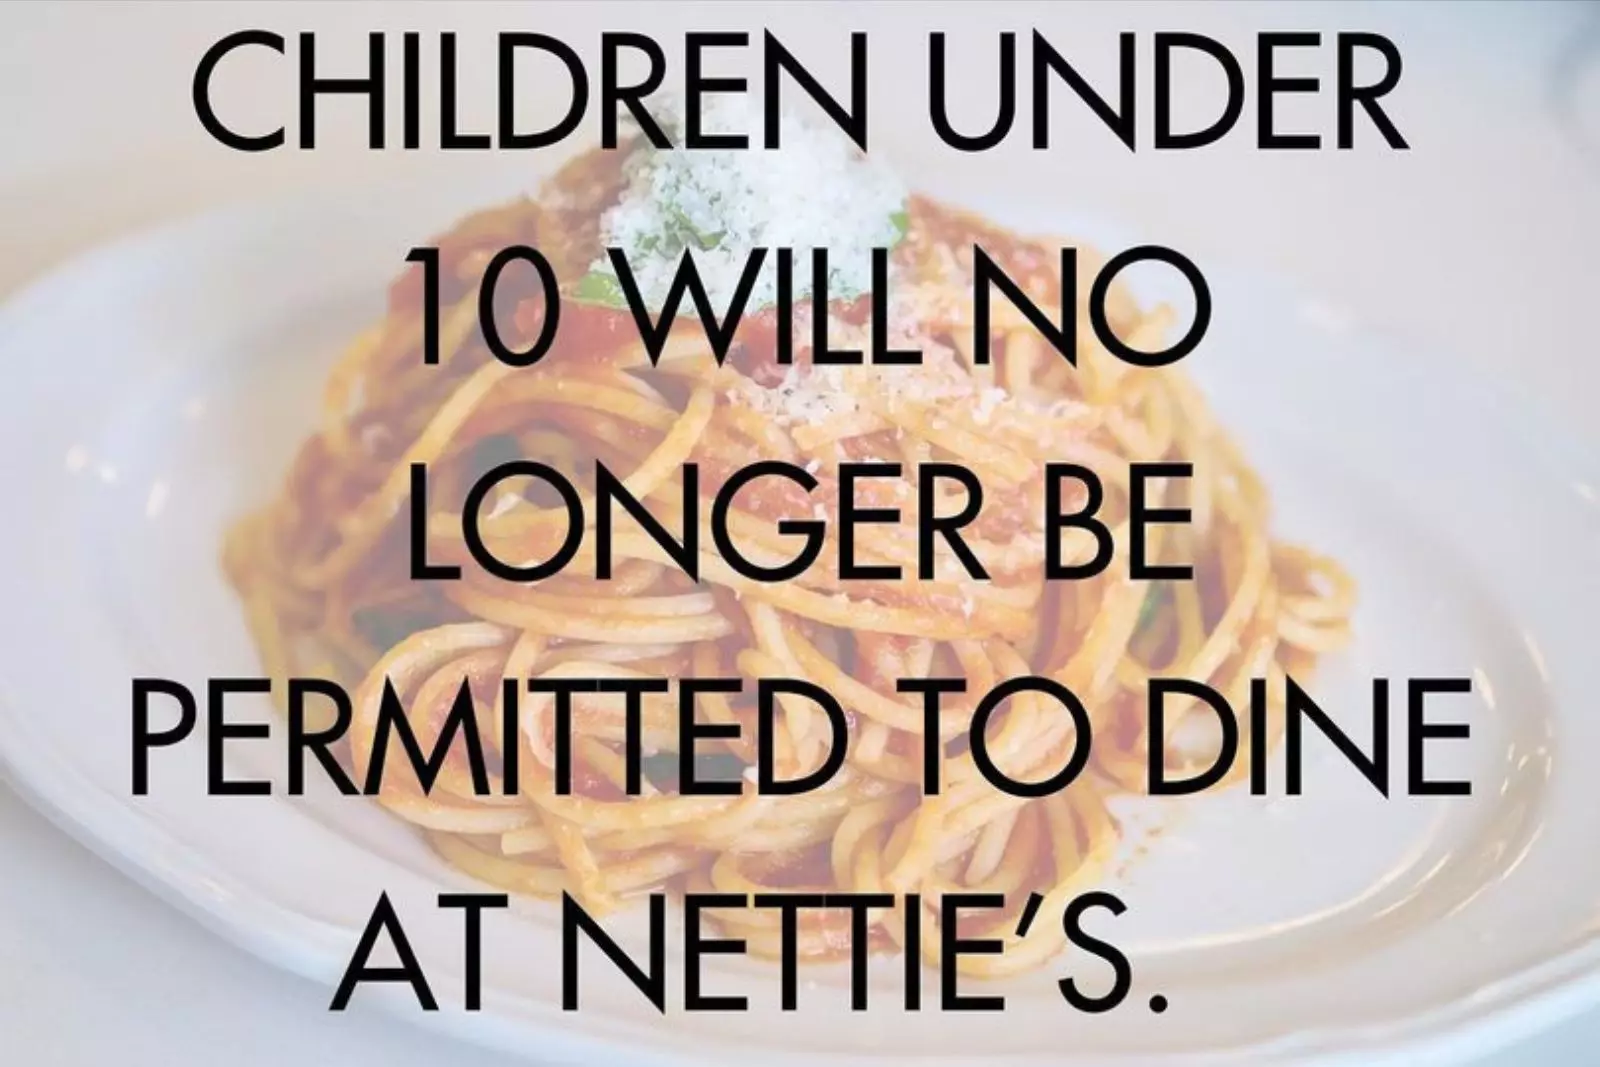 Italian restaurant in Tinton Falls, NJ won't serve kids under 10